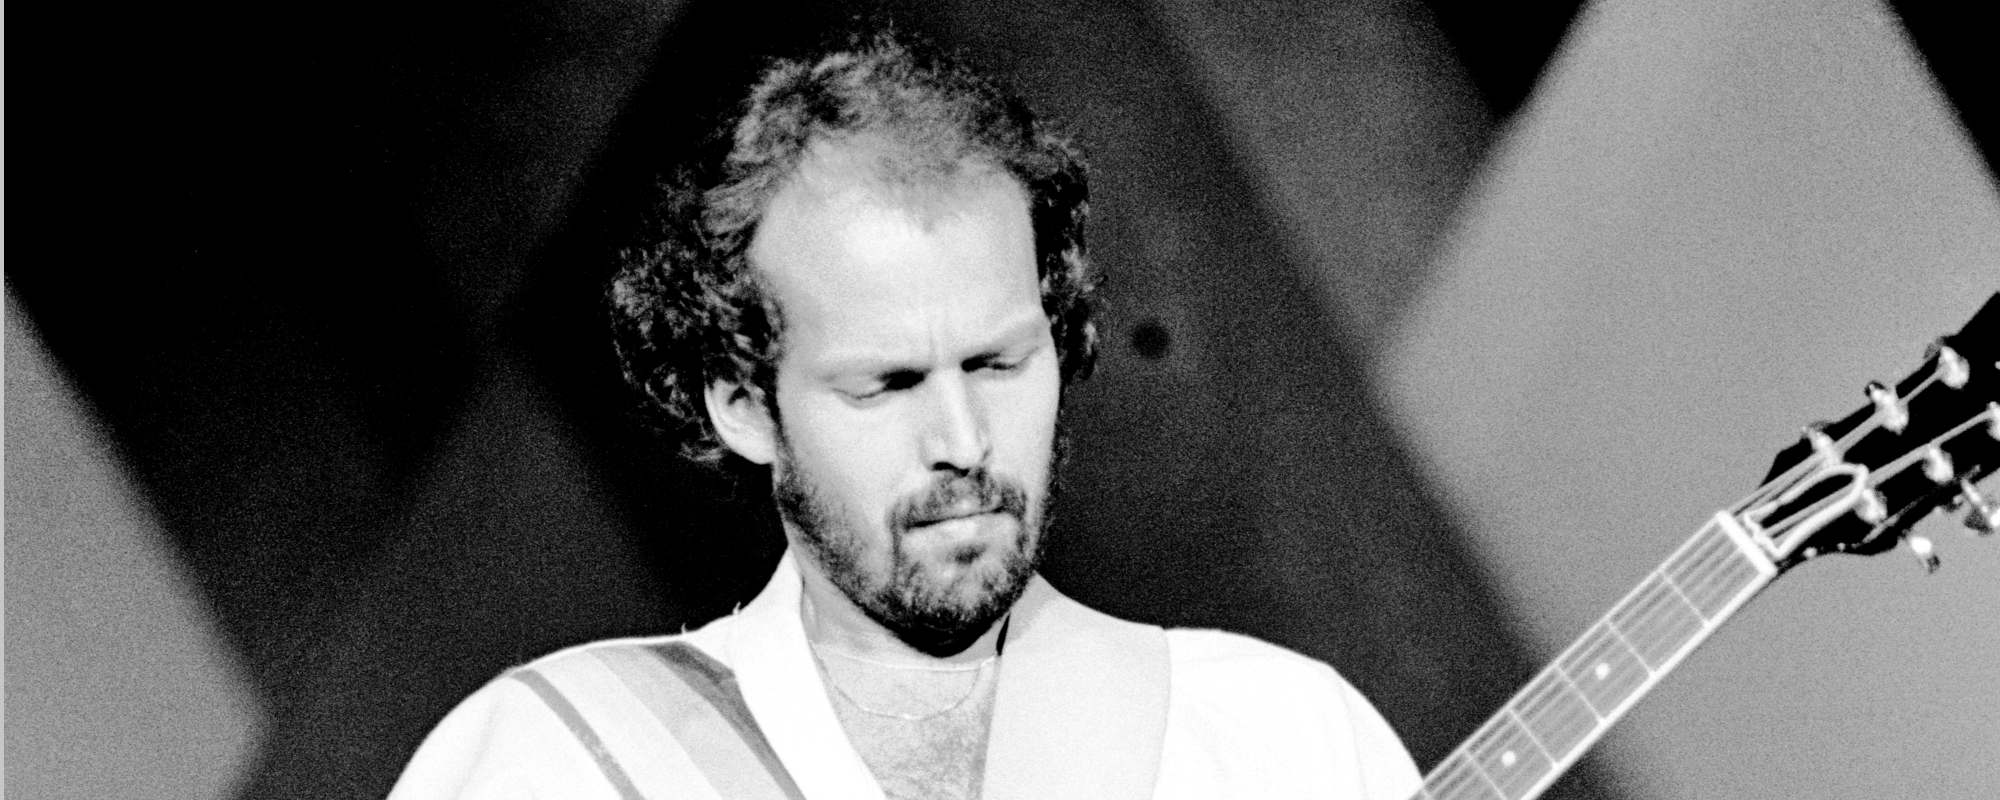 ABBA Guitarist, Lasse Wellander Dead at 70